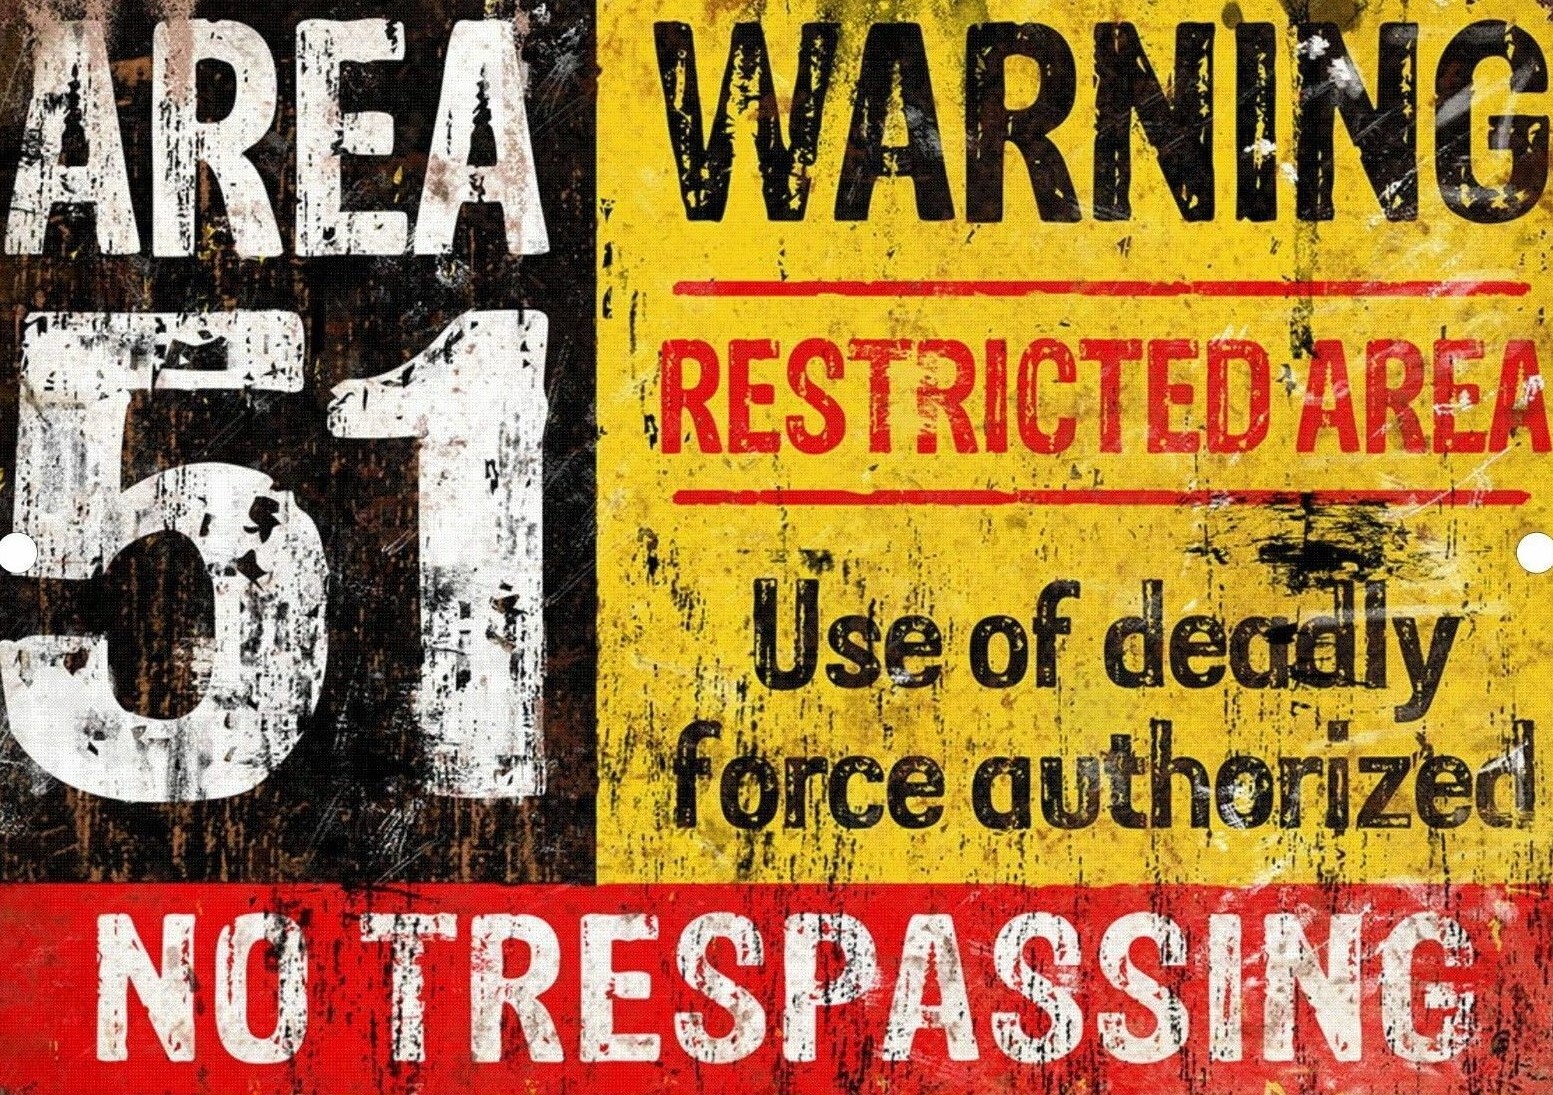 Area 51 Warning!